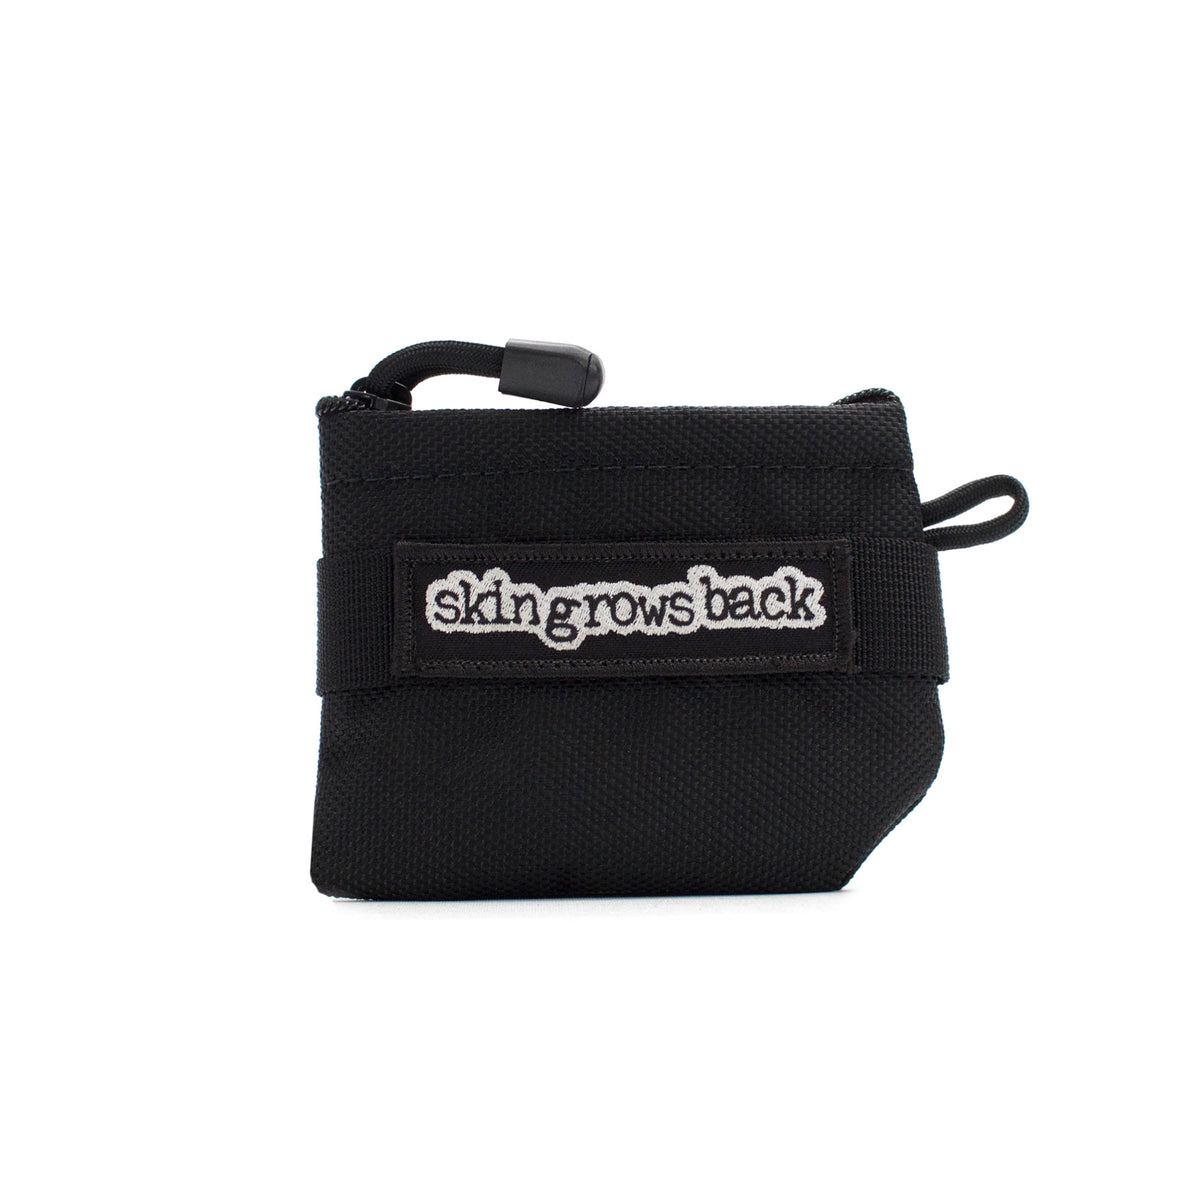 skingrowsback pocket mini modular pouch black